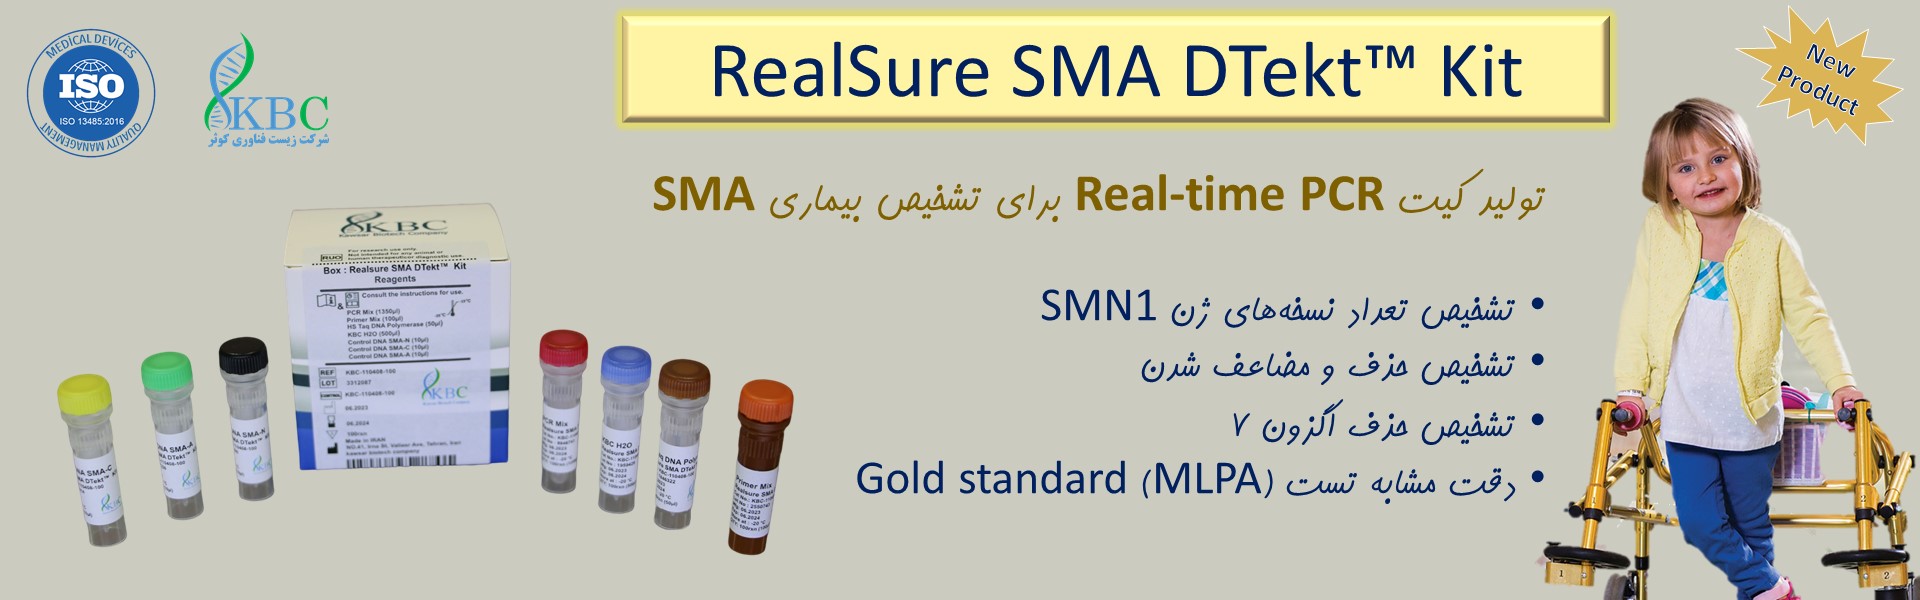 Realsure SMA DTekt™ Kit